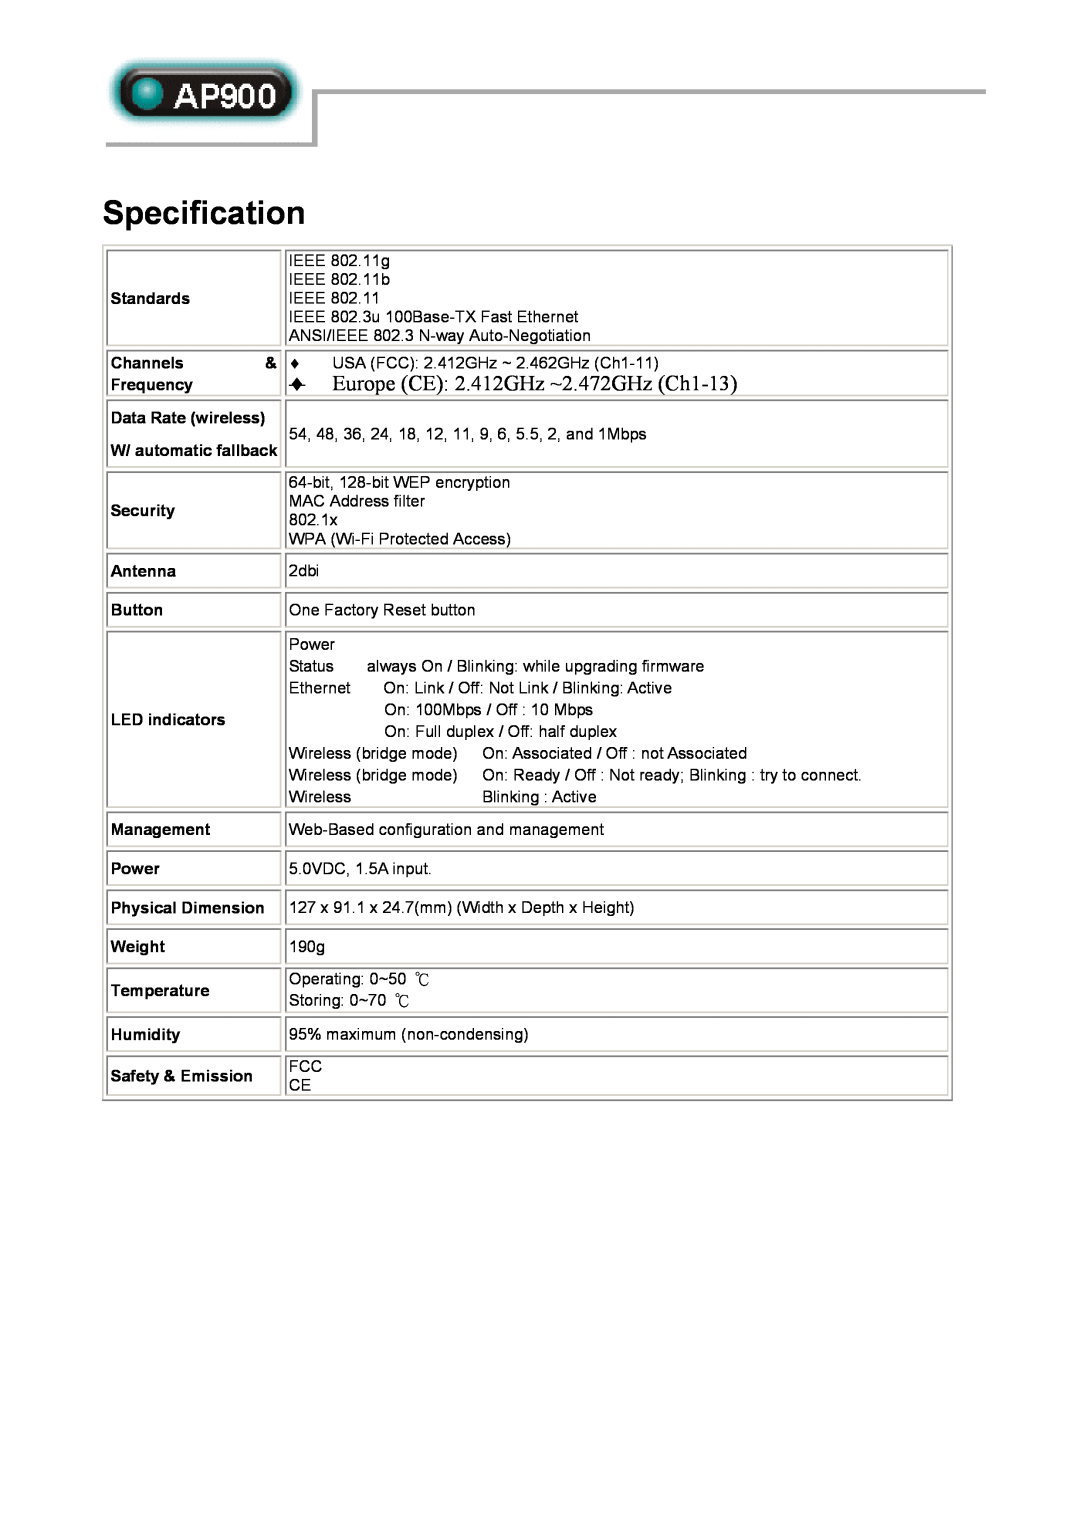 Abocom AP900 Specification, Europe CE 2.412GHz ~2.472GHz Ch1-13, Standards, Channels, USA FCC 2.412GHz ~ 2.462GHz Ch1-11 